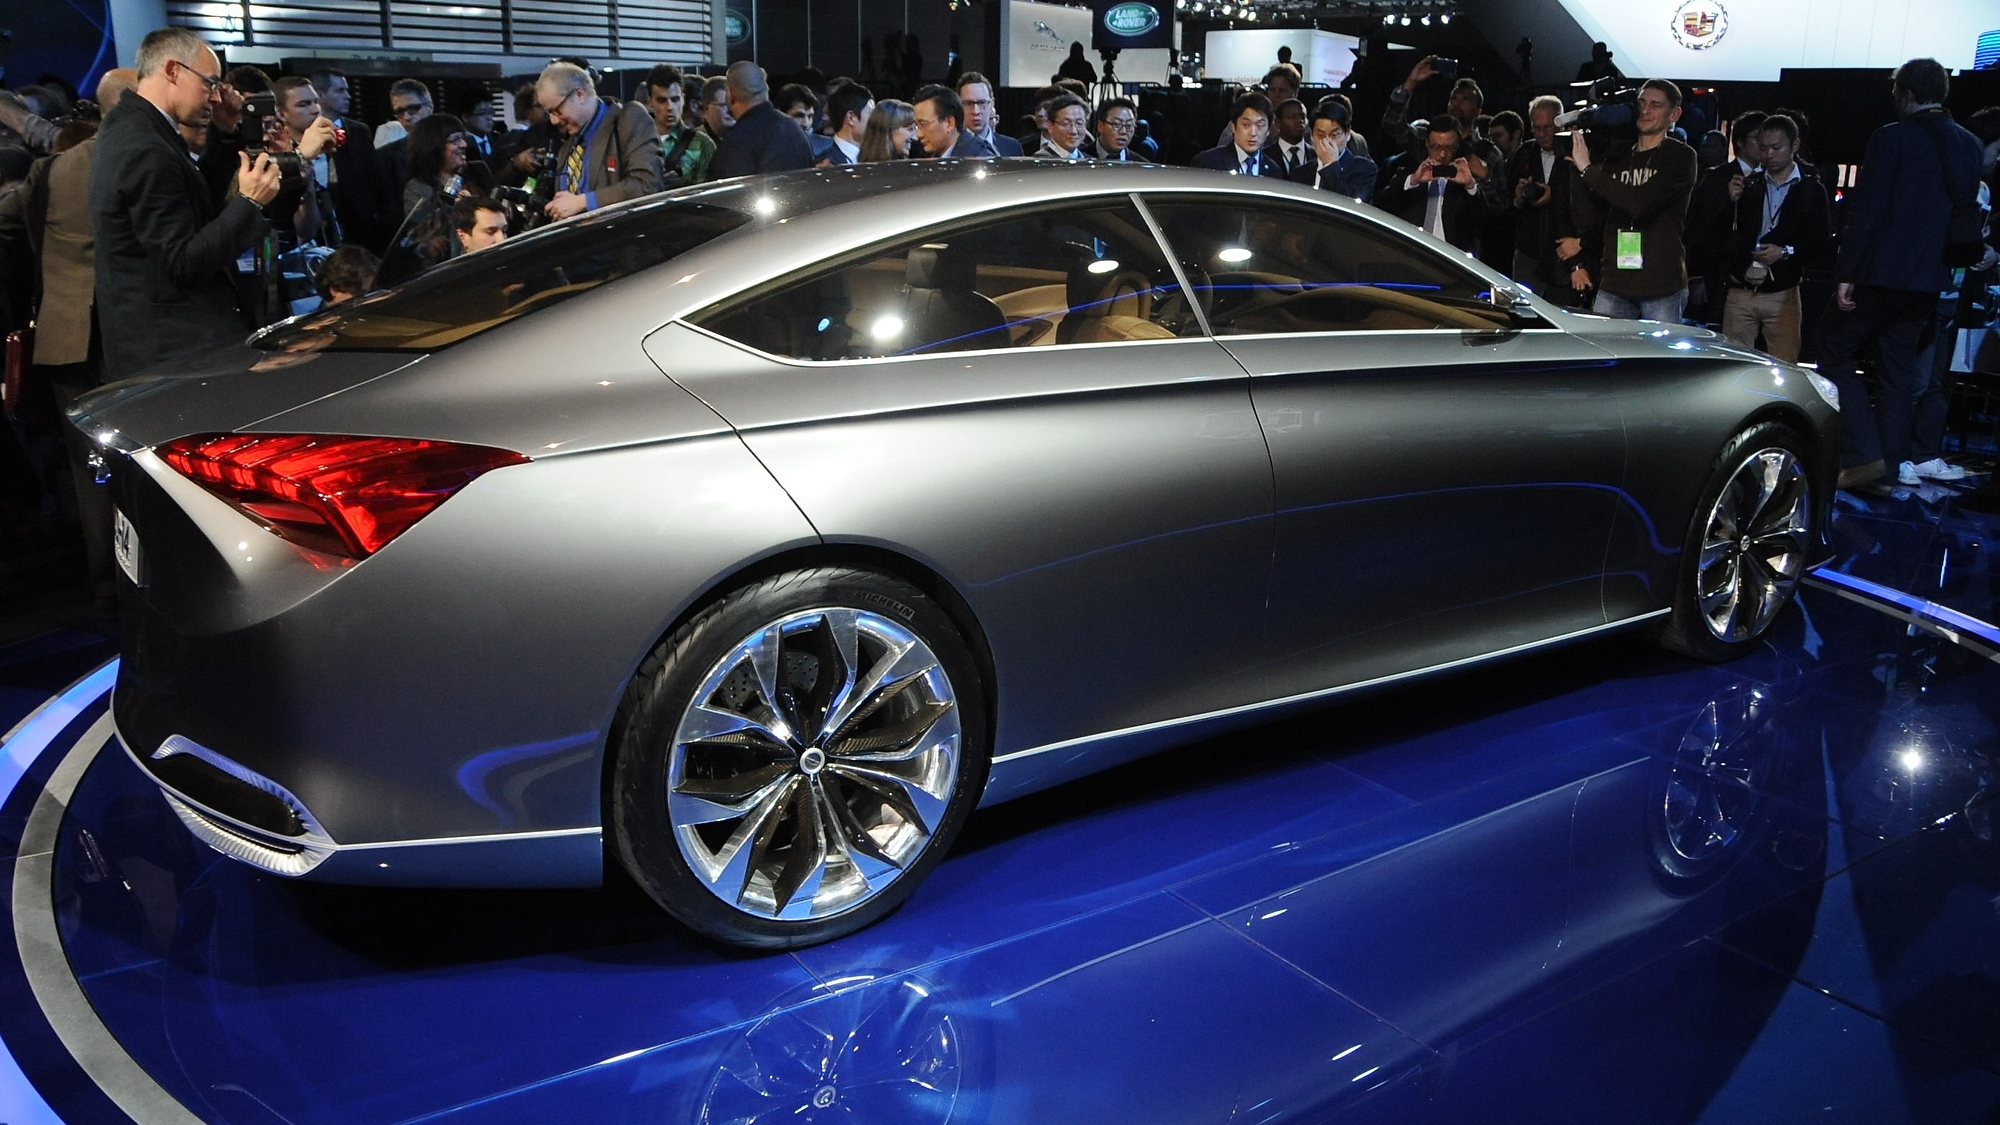 Hyundai HCD-14 Genesis Concept revealed at 2013 Detroit Auto Show